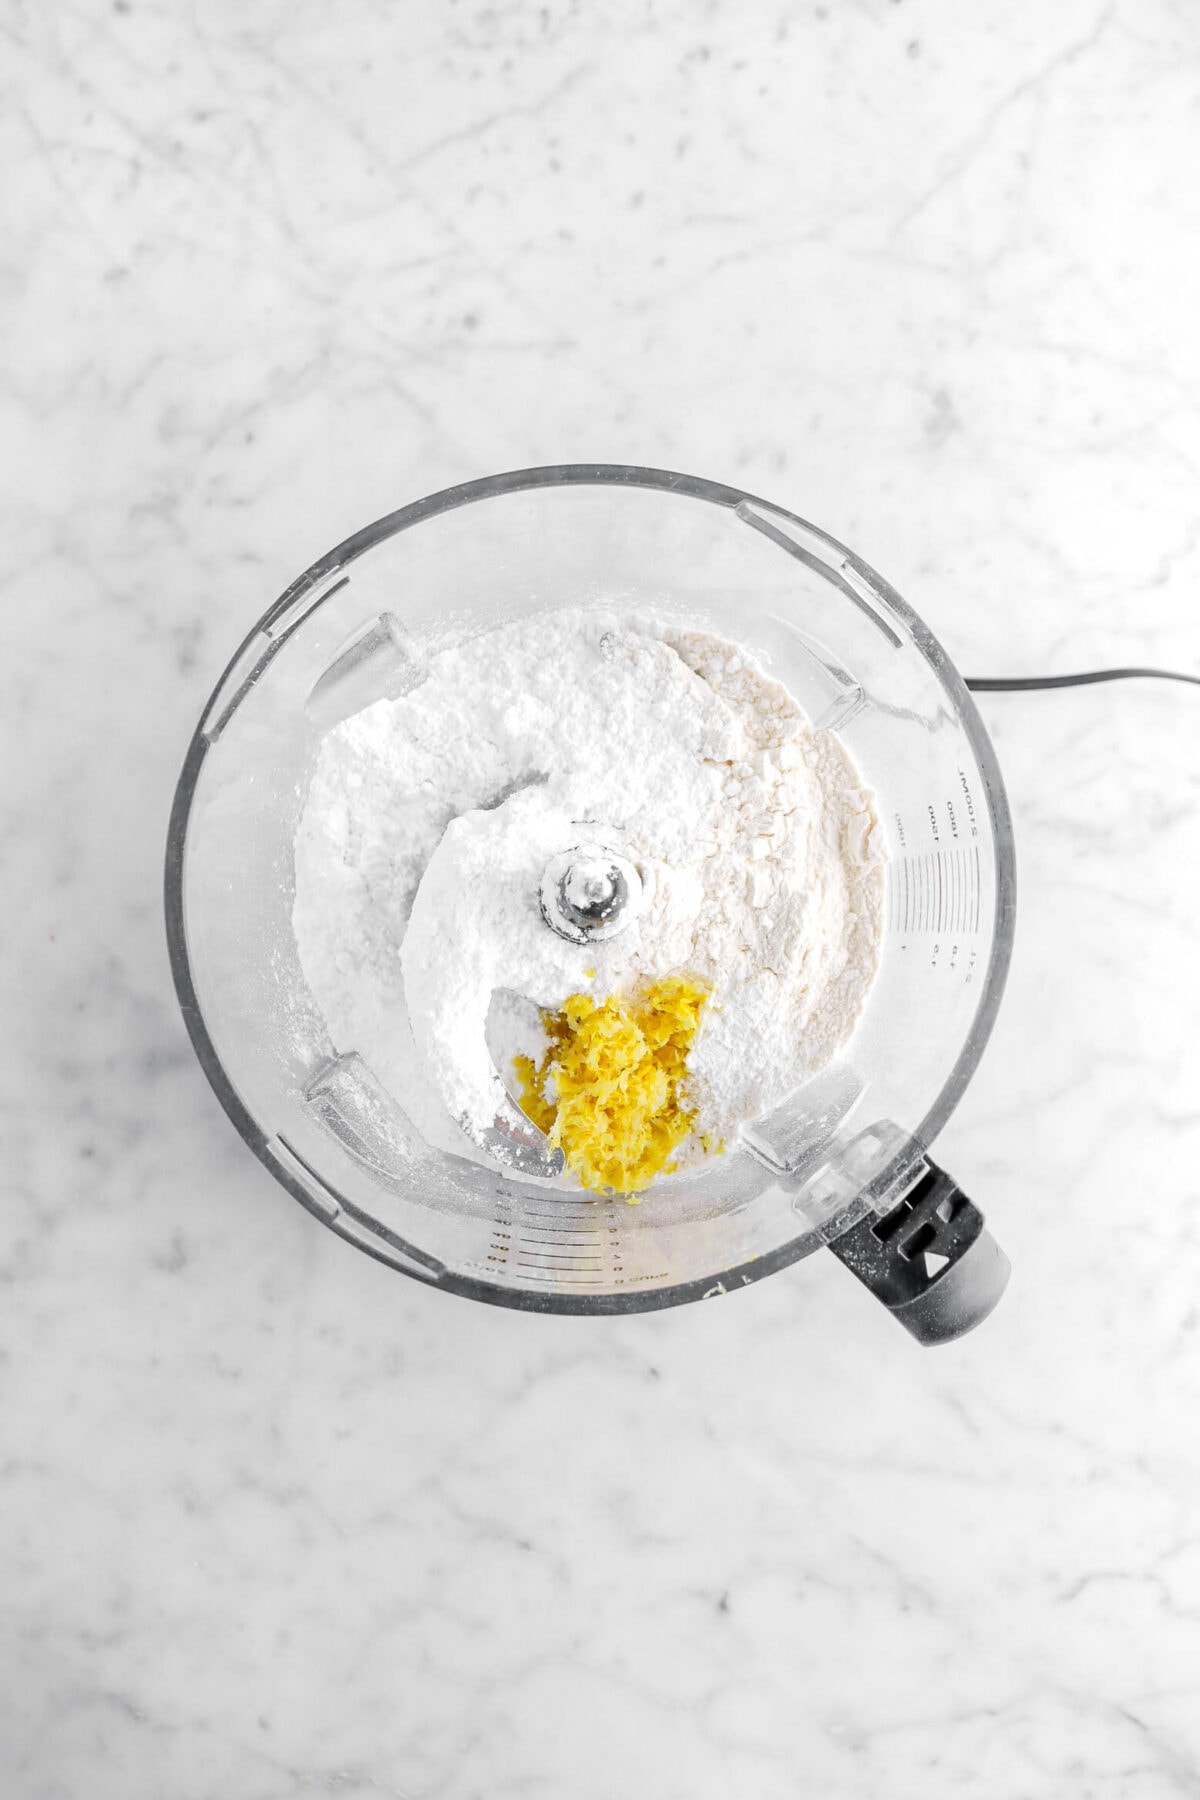 flour, powdered sugar, and lemon zest in food processor.